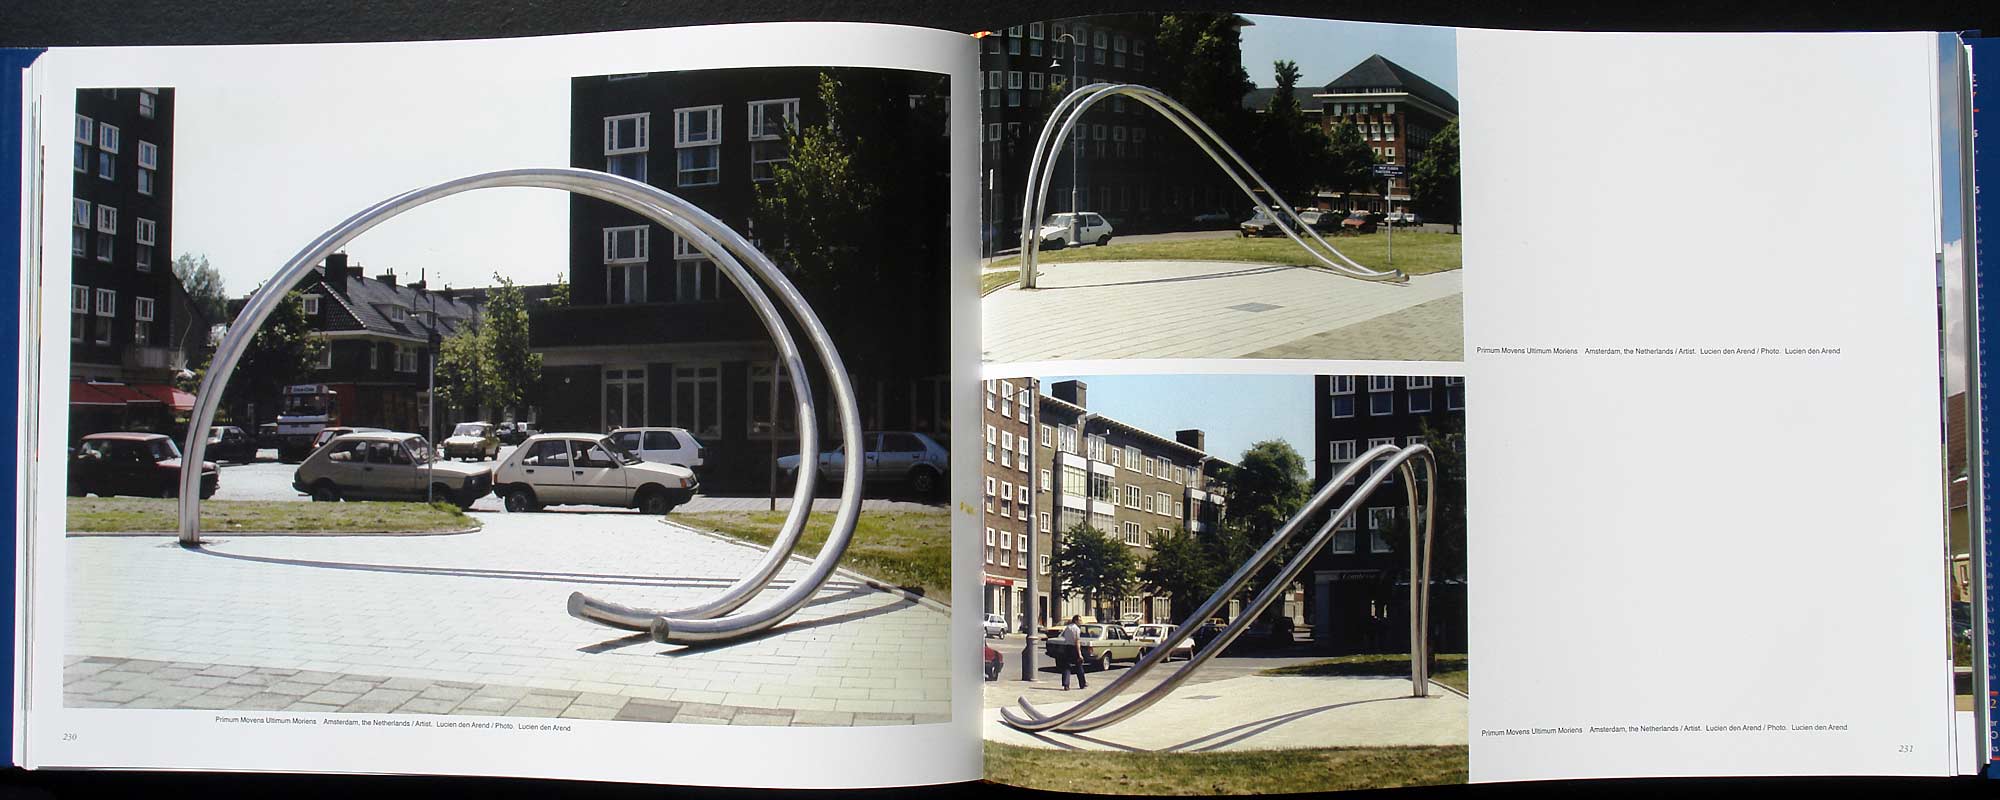 Public Art: A World's Eye View - Amsterdam public sculpture.